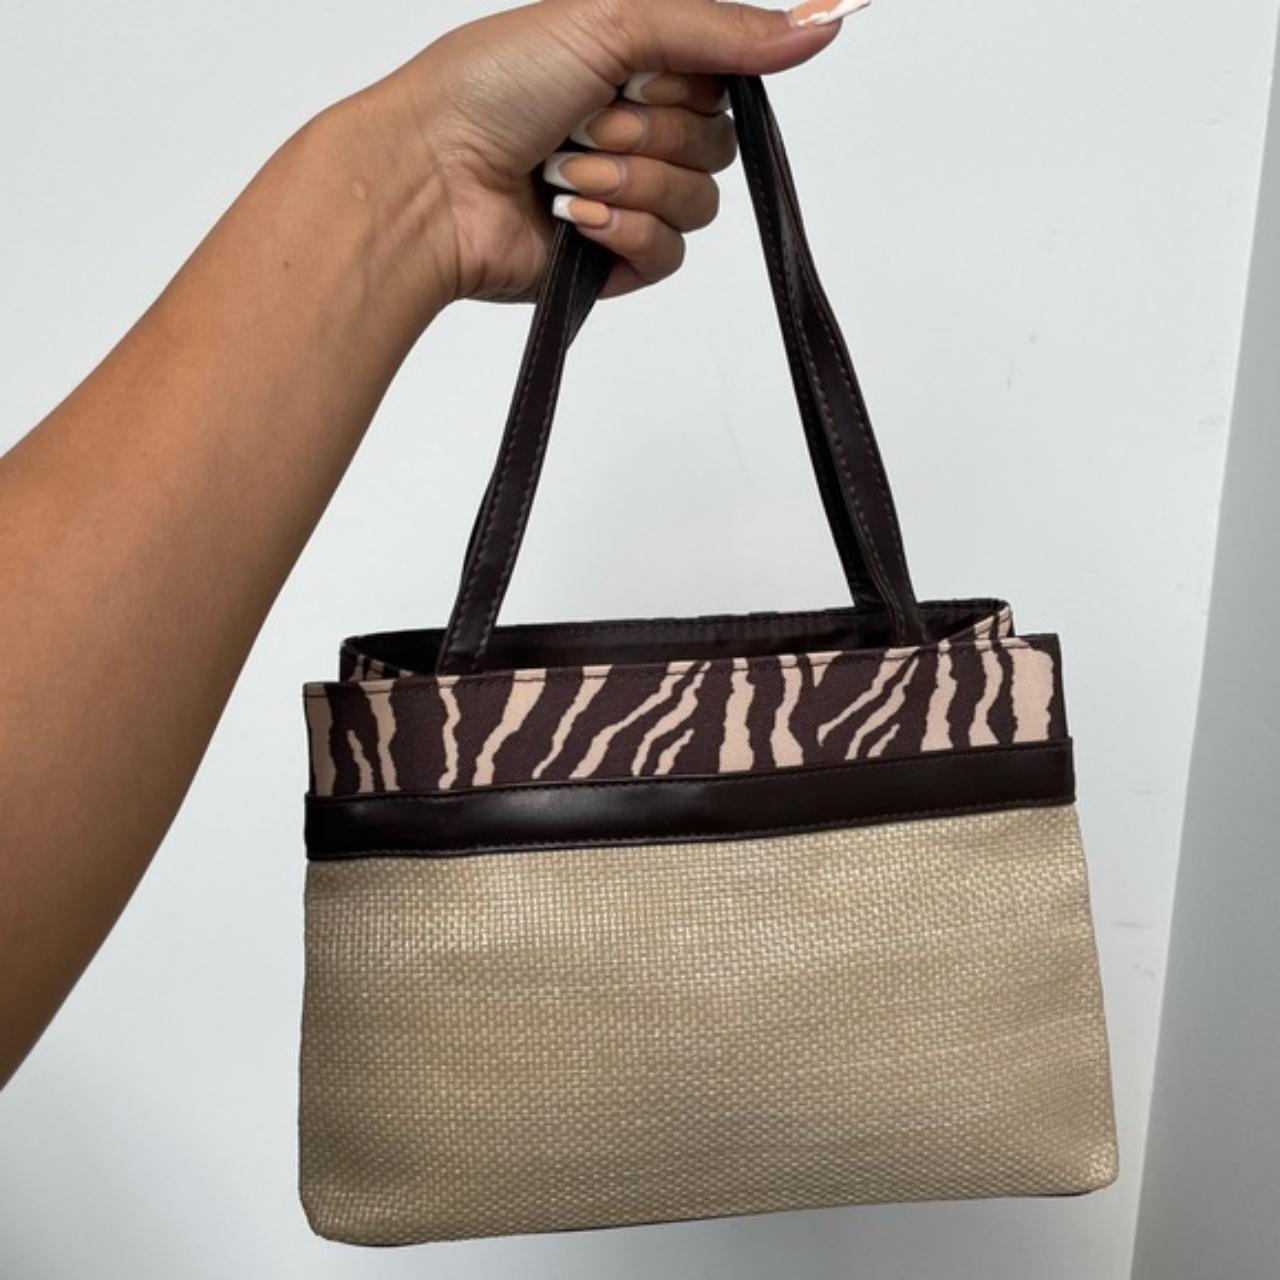 Product Image 4 - estee lauder
zebra print handbag, straw